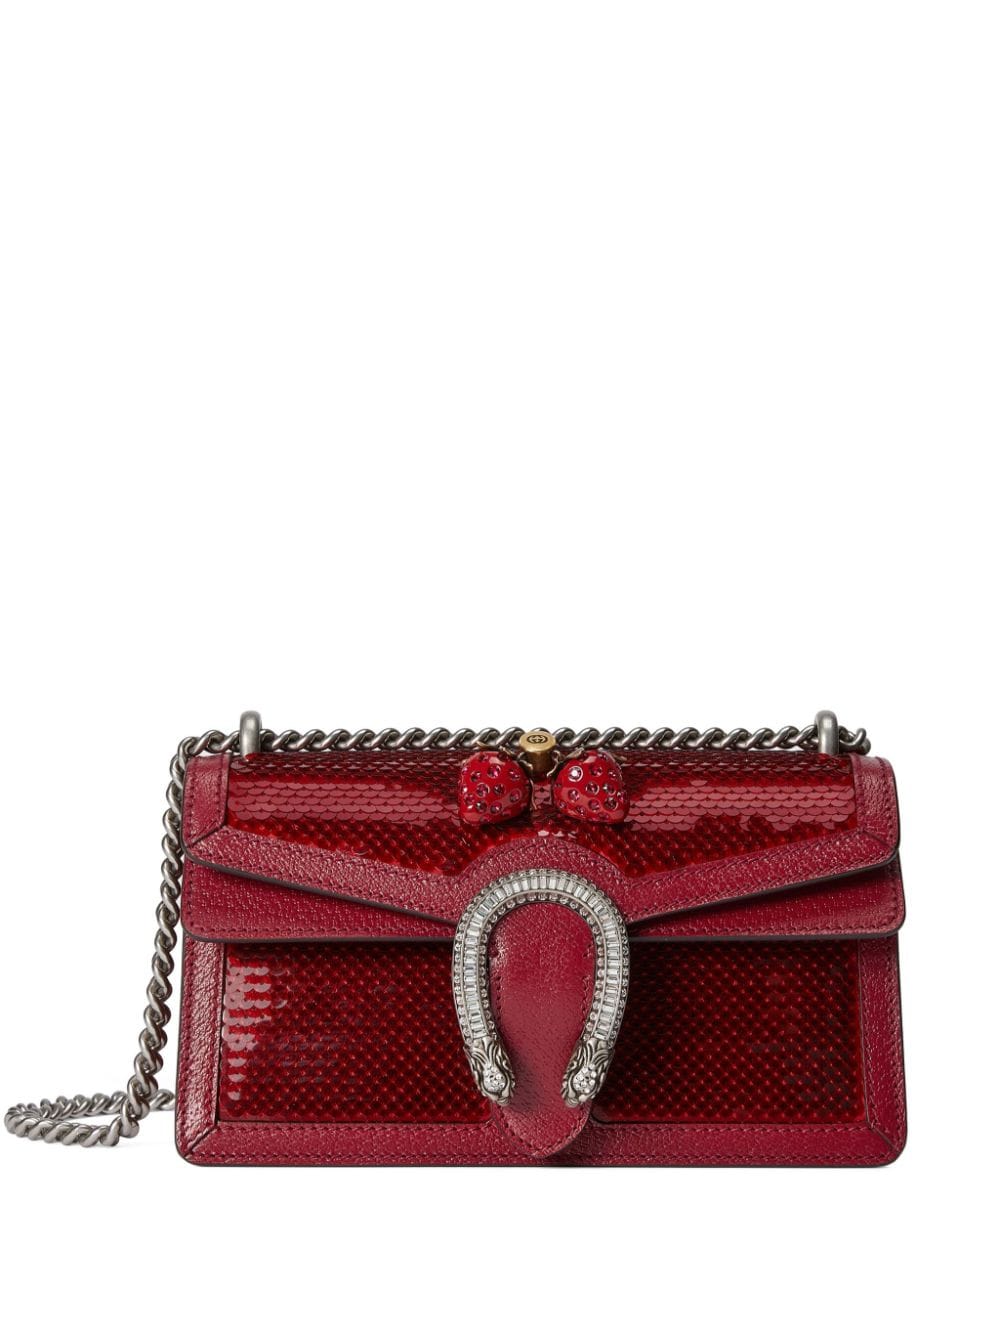 Dionysus Medium Sequined Shoulder Bag in Red - Gucci